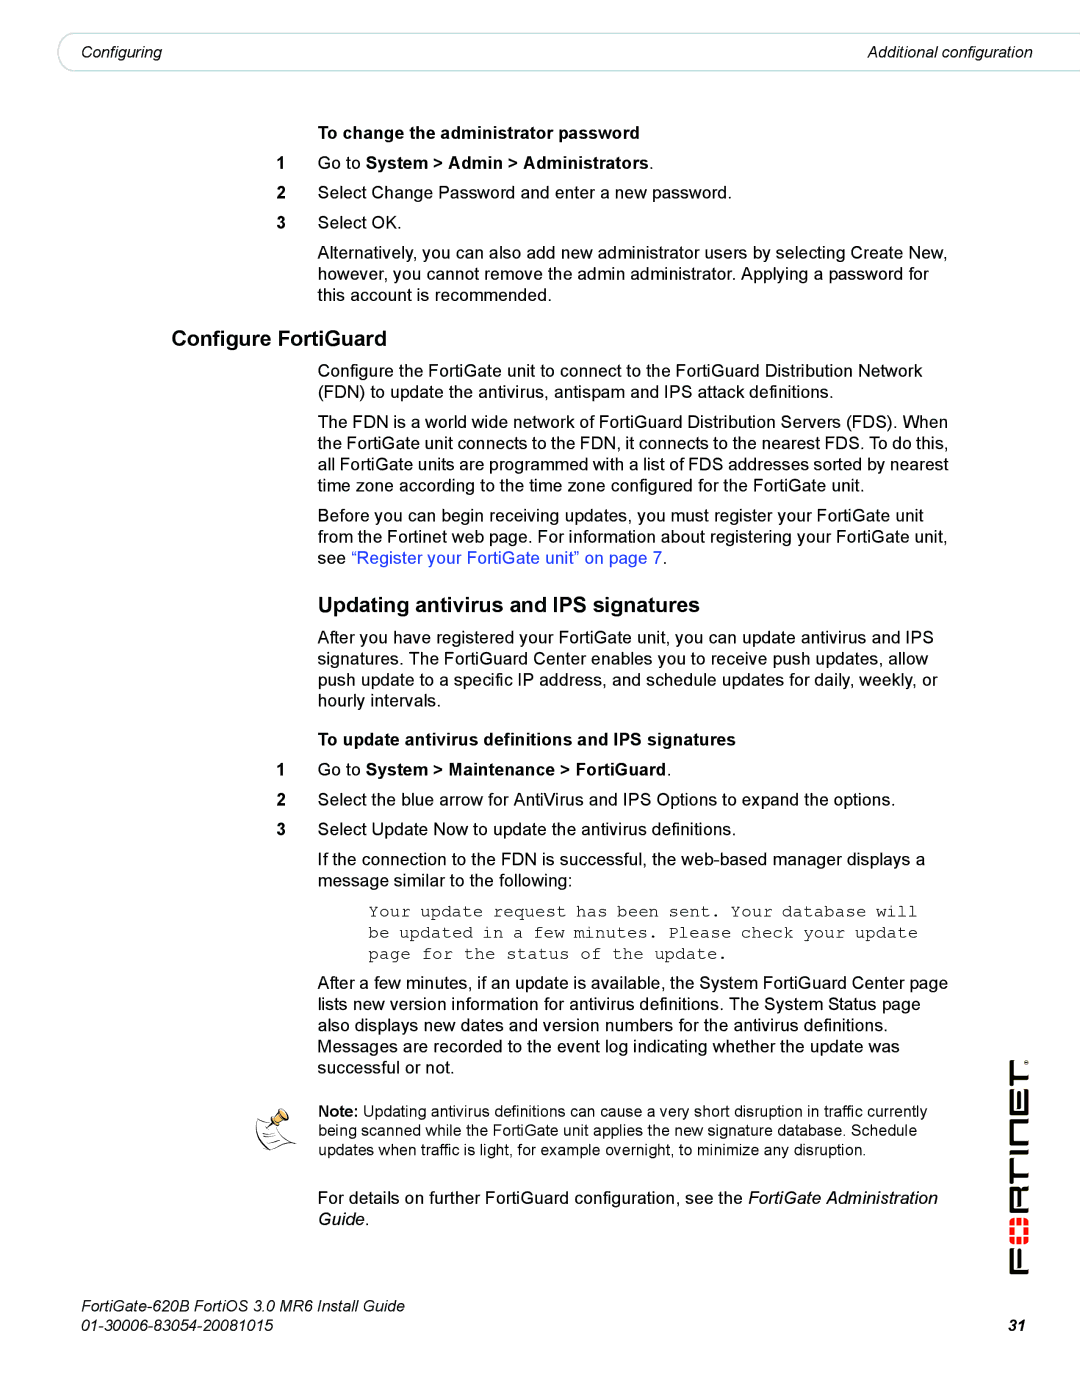 Fortinet 620B manual Configure FortiGuard, Updating antivirus and IPS signatures 